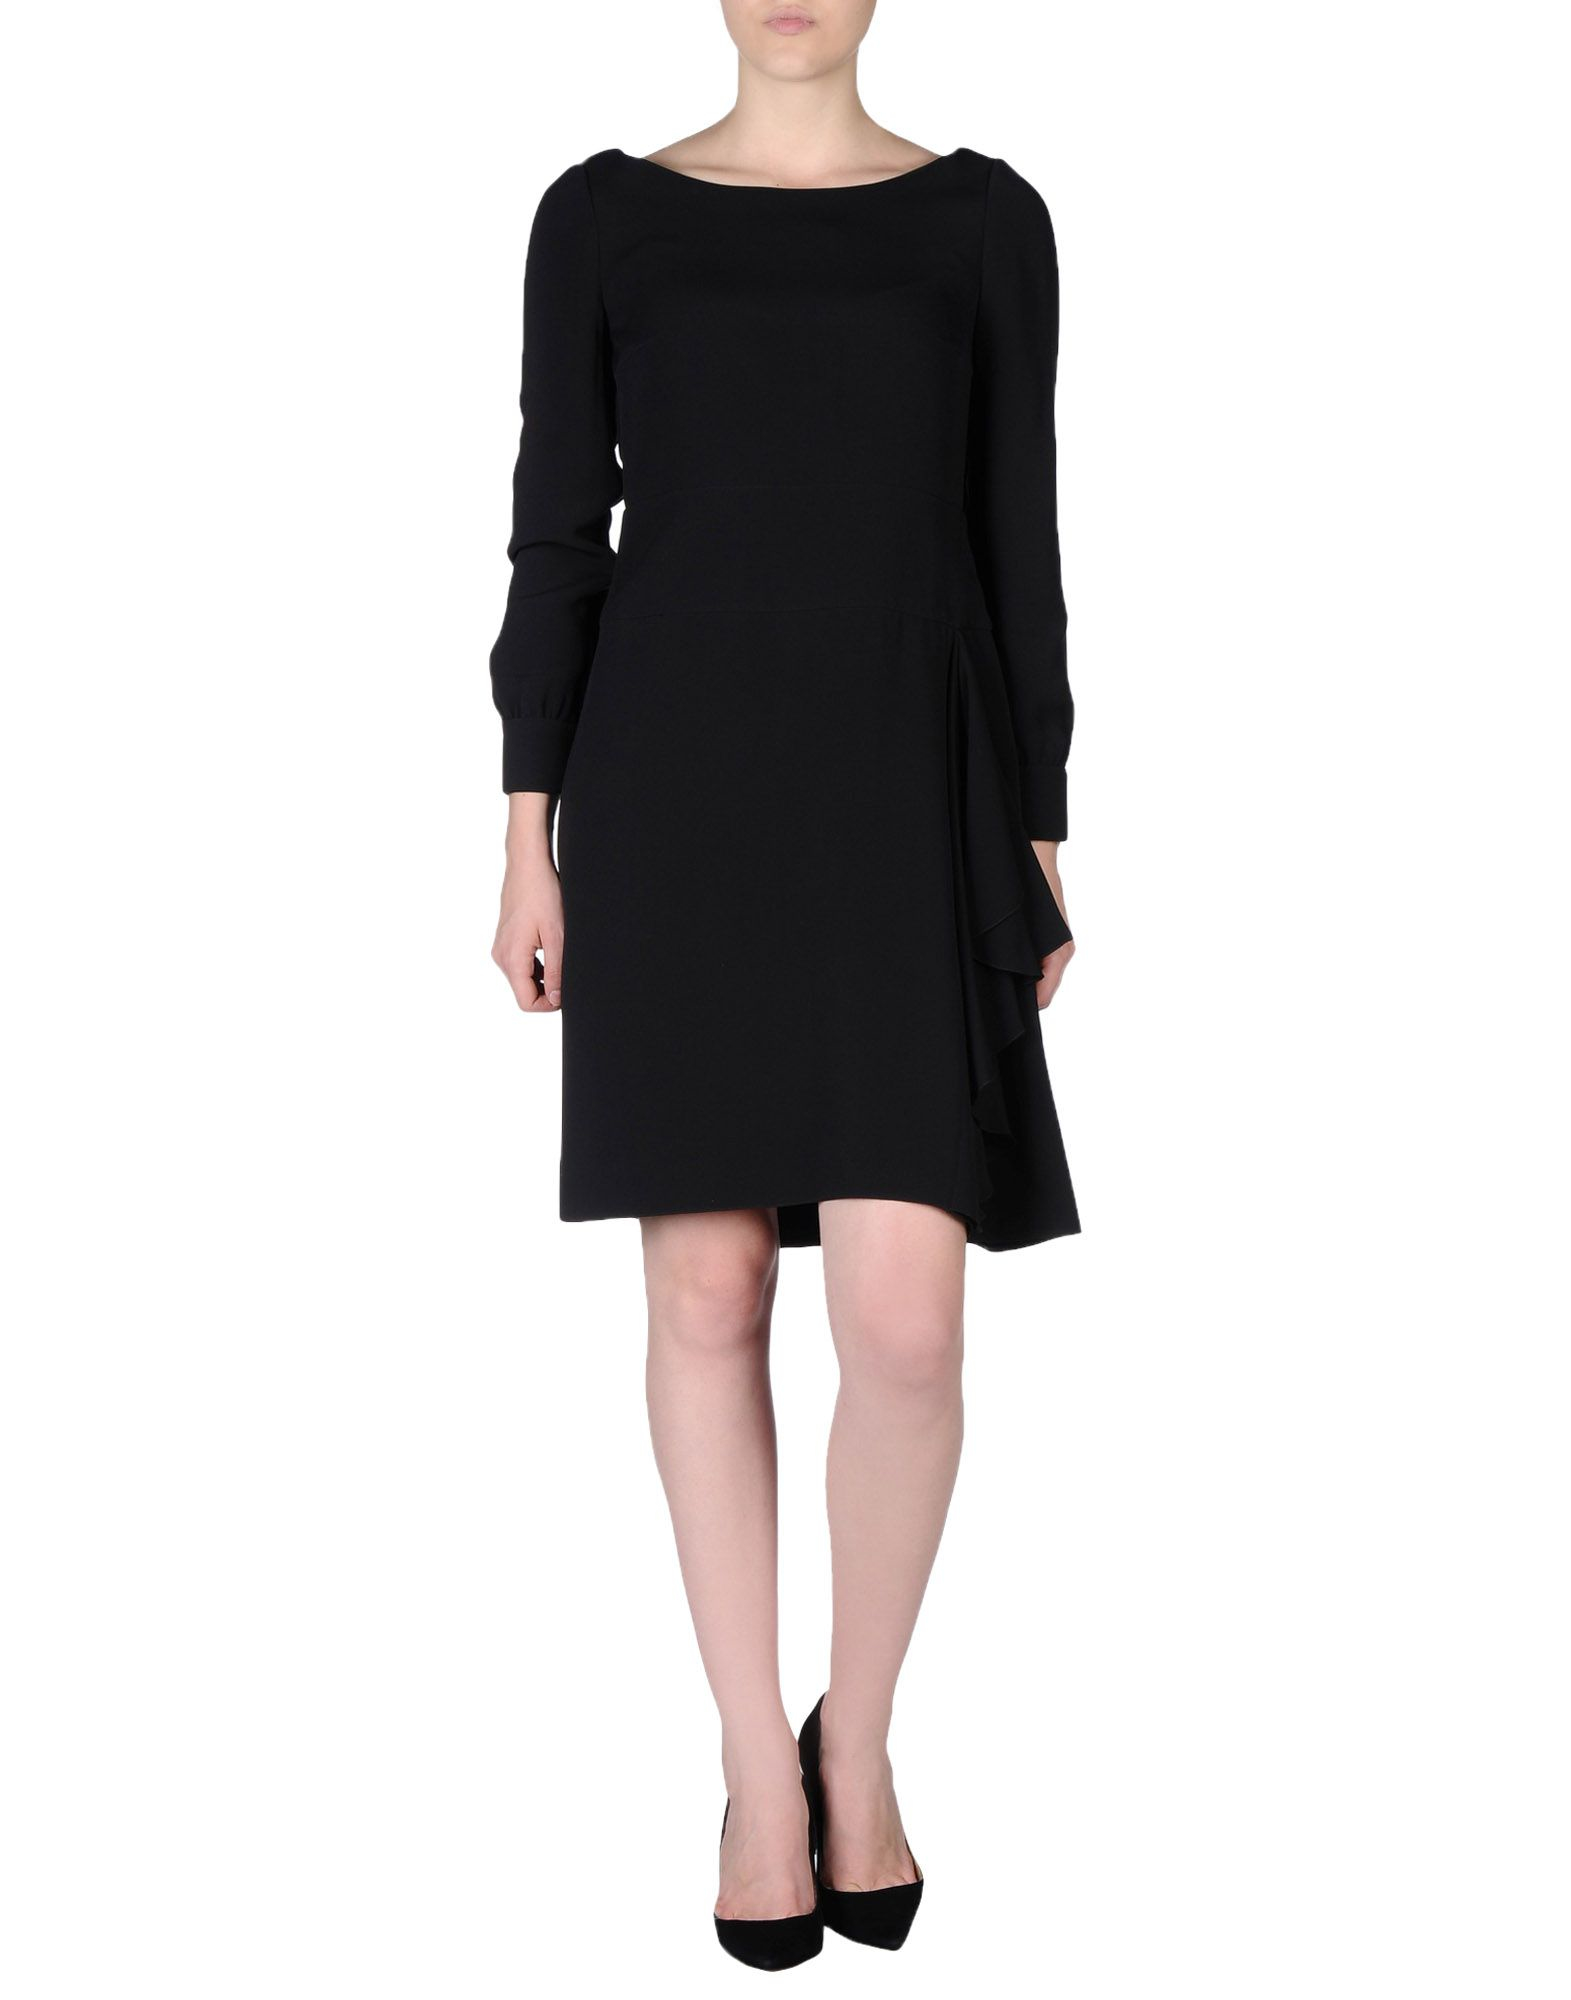 Lyst - Prada Knee-length Dress in Black